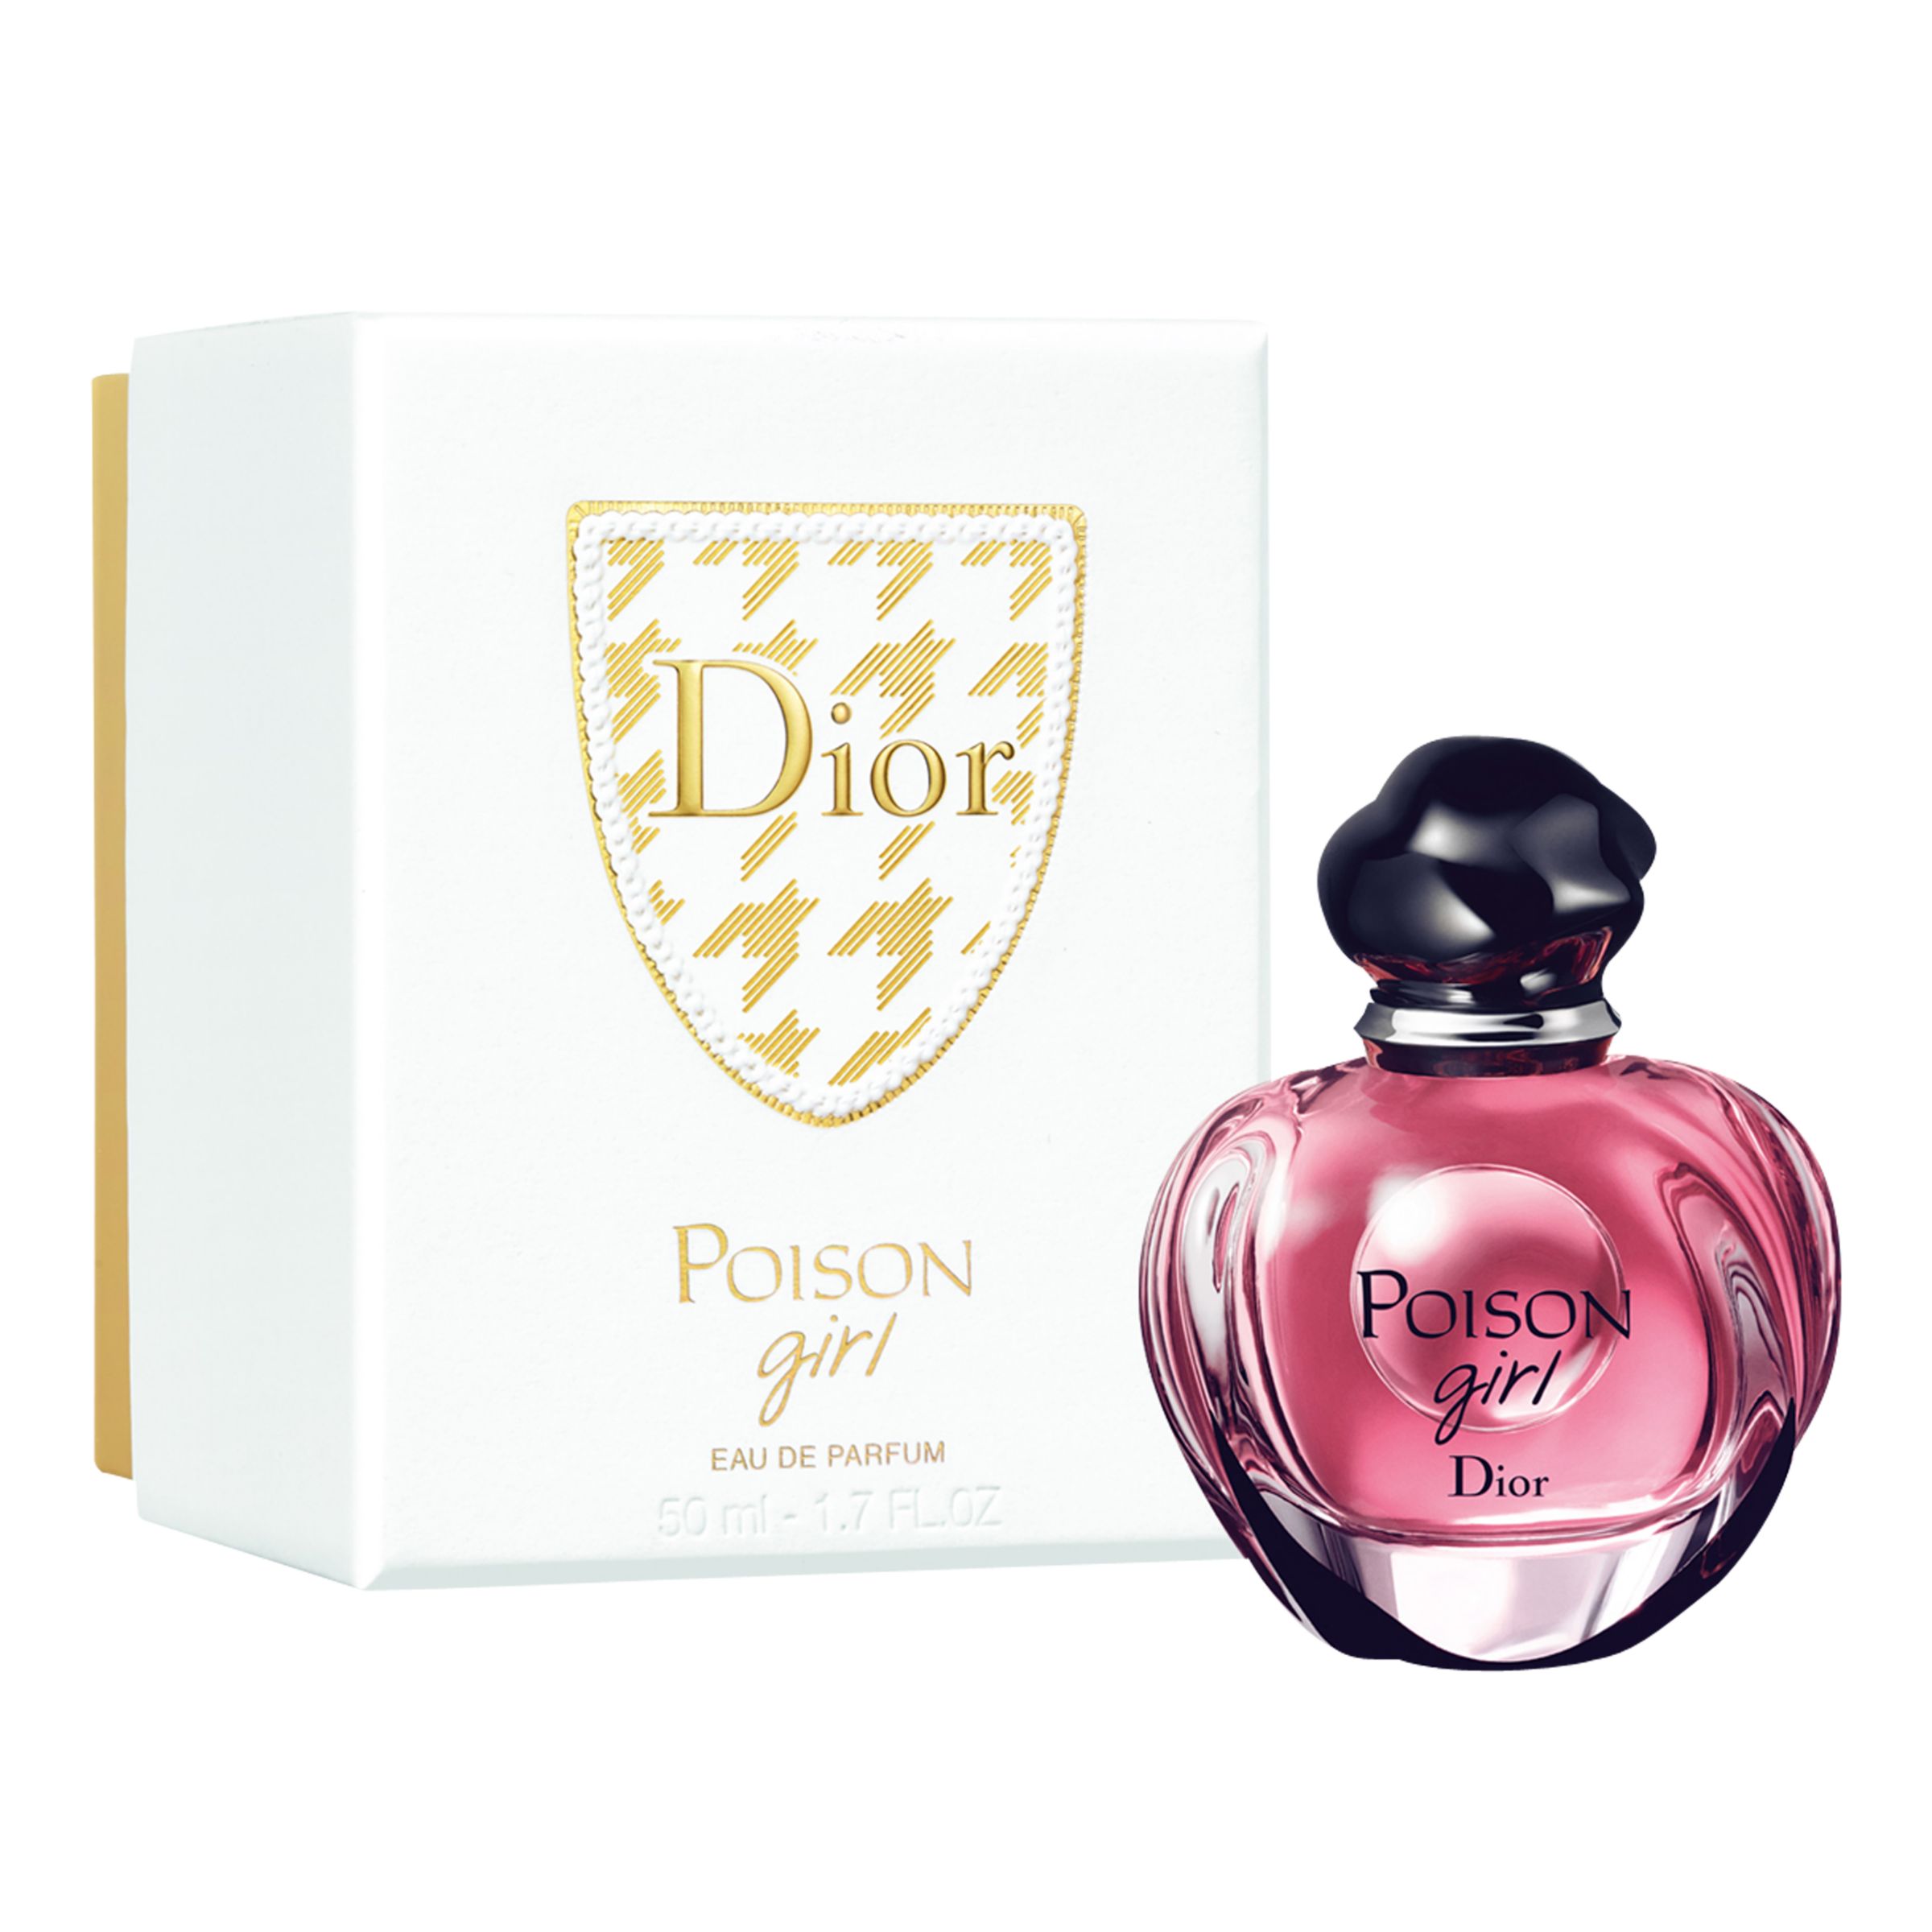 dior poison girl 50ml gift set